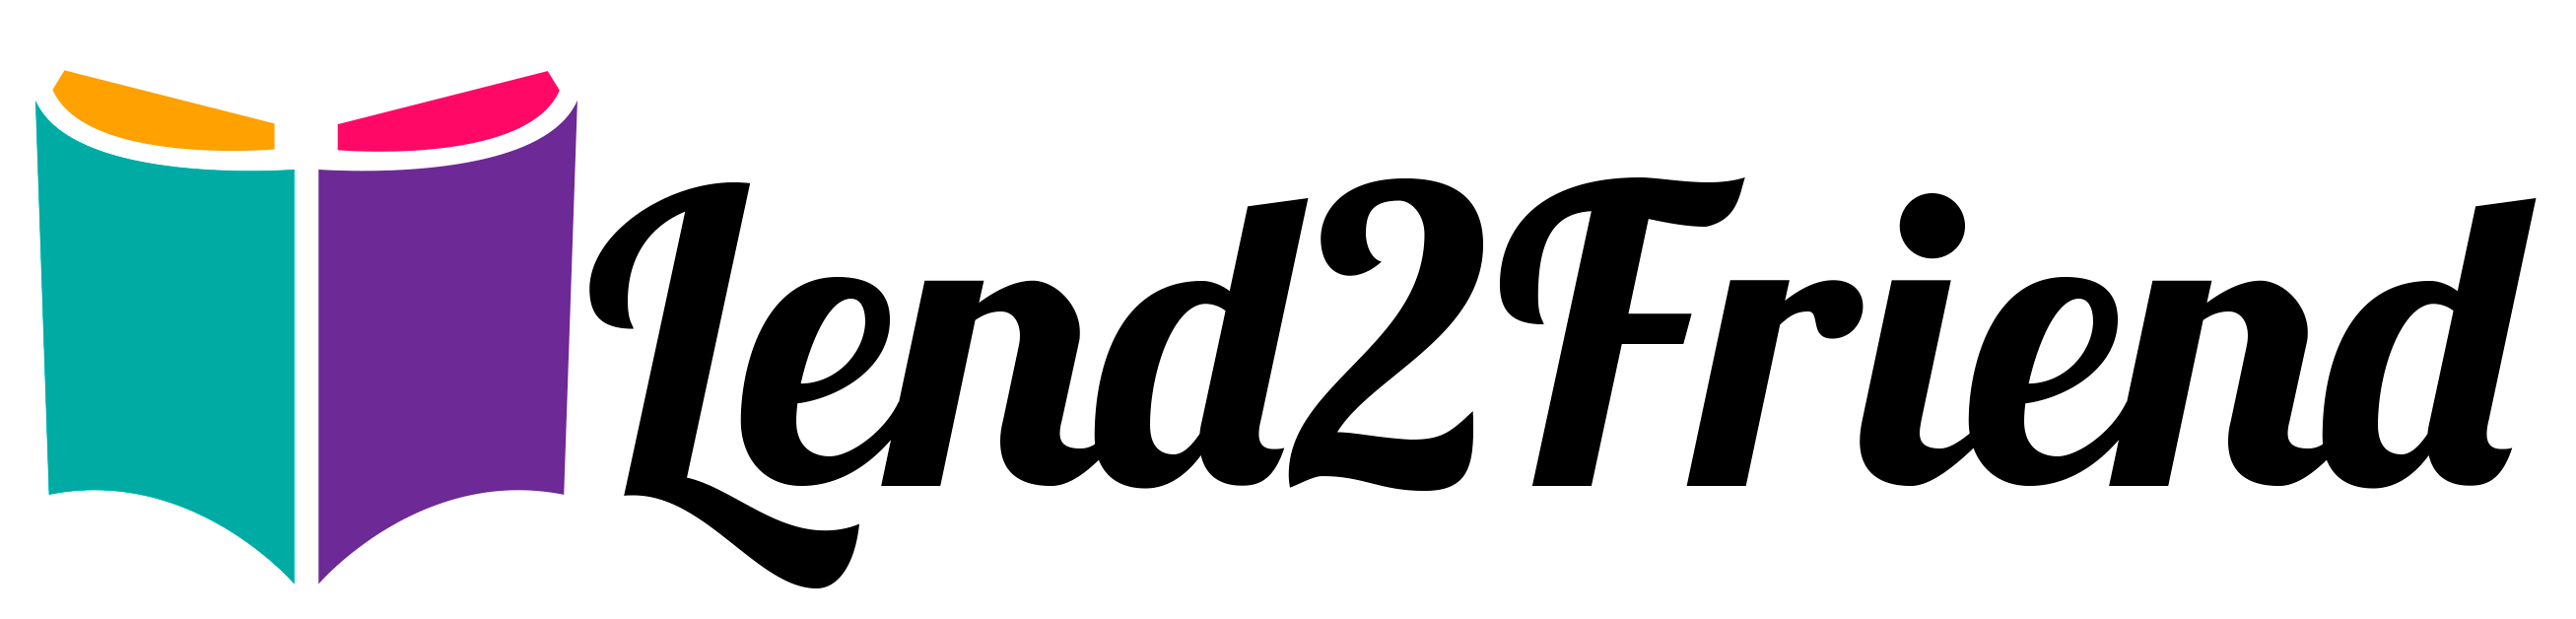 Lend2Friend logo